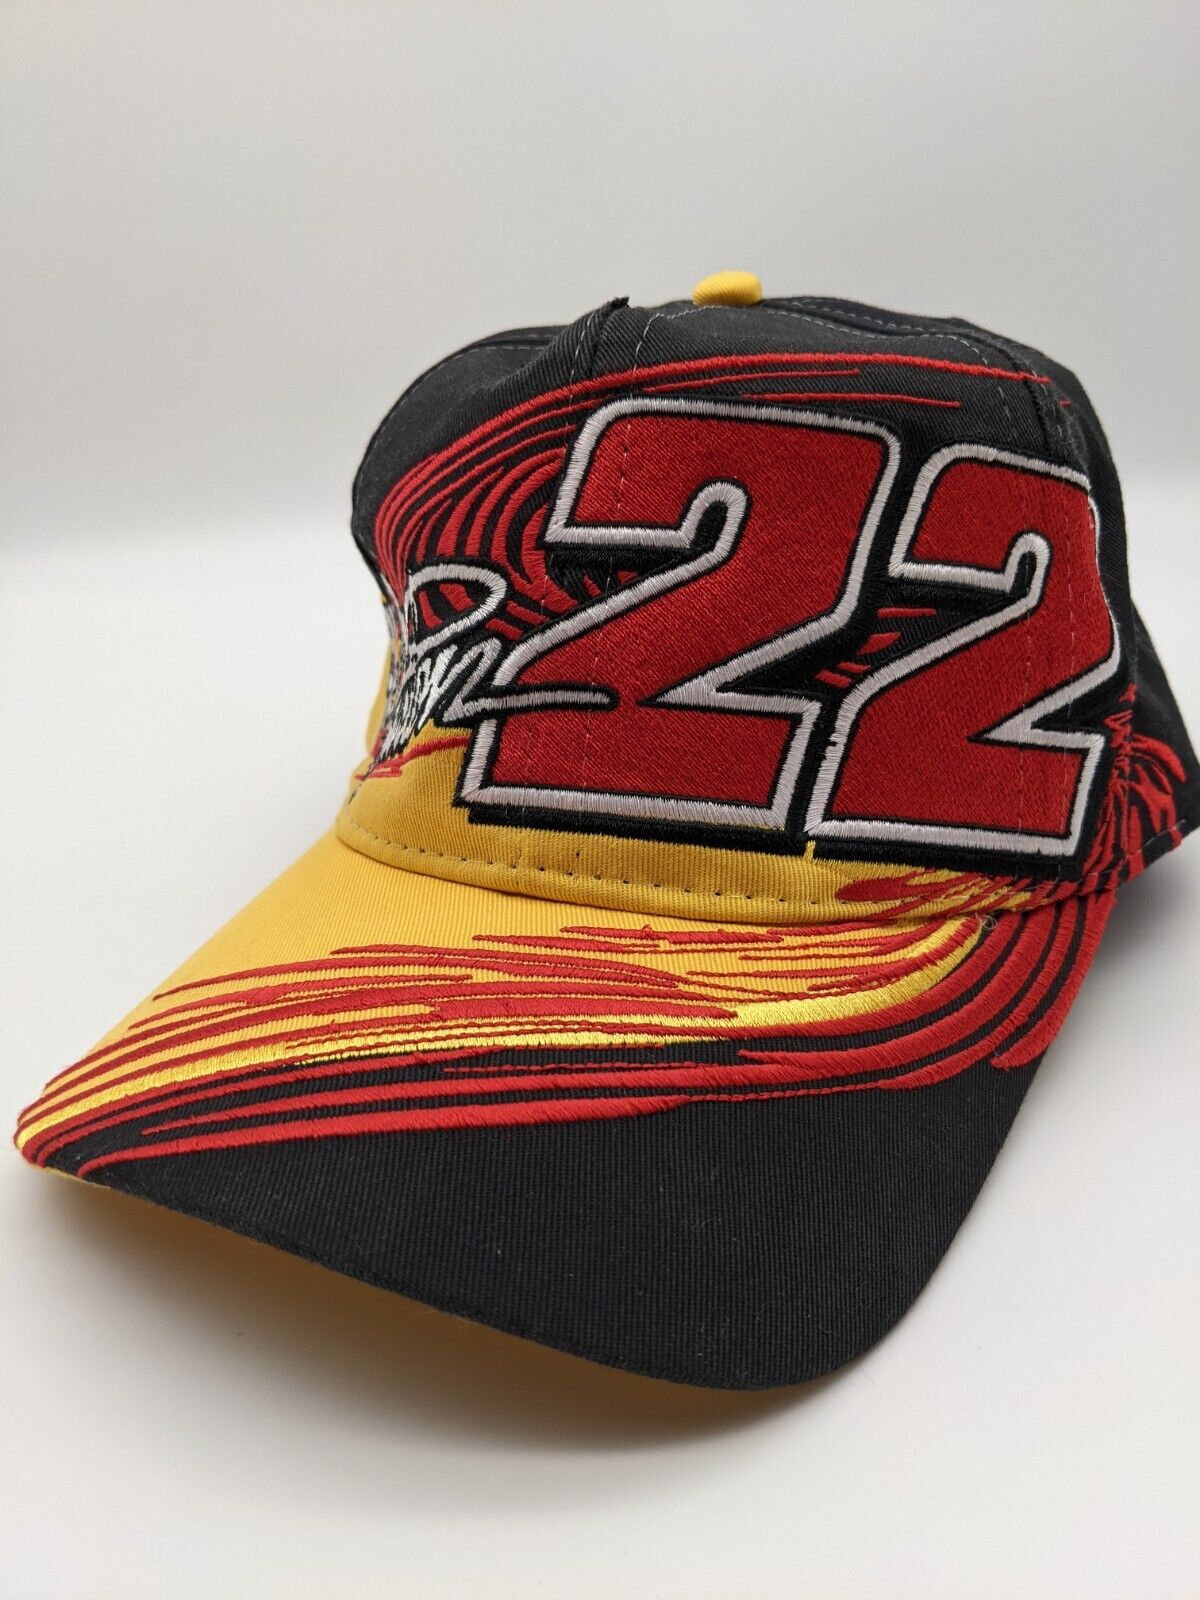 Ward Burton #22 Nascar Racing Champions Cat Racing Snapback Hat